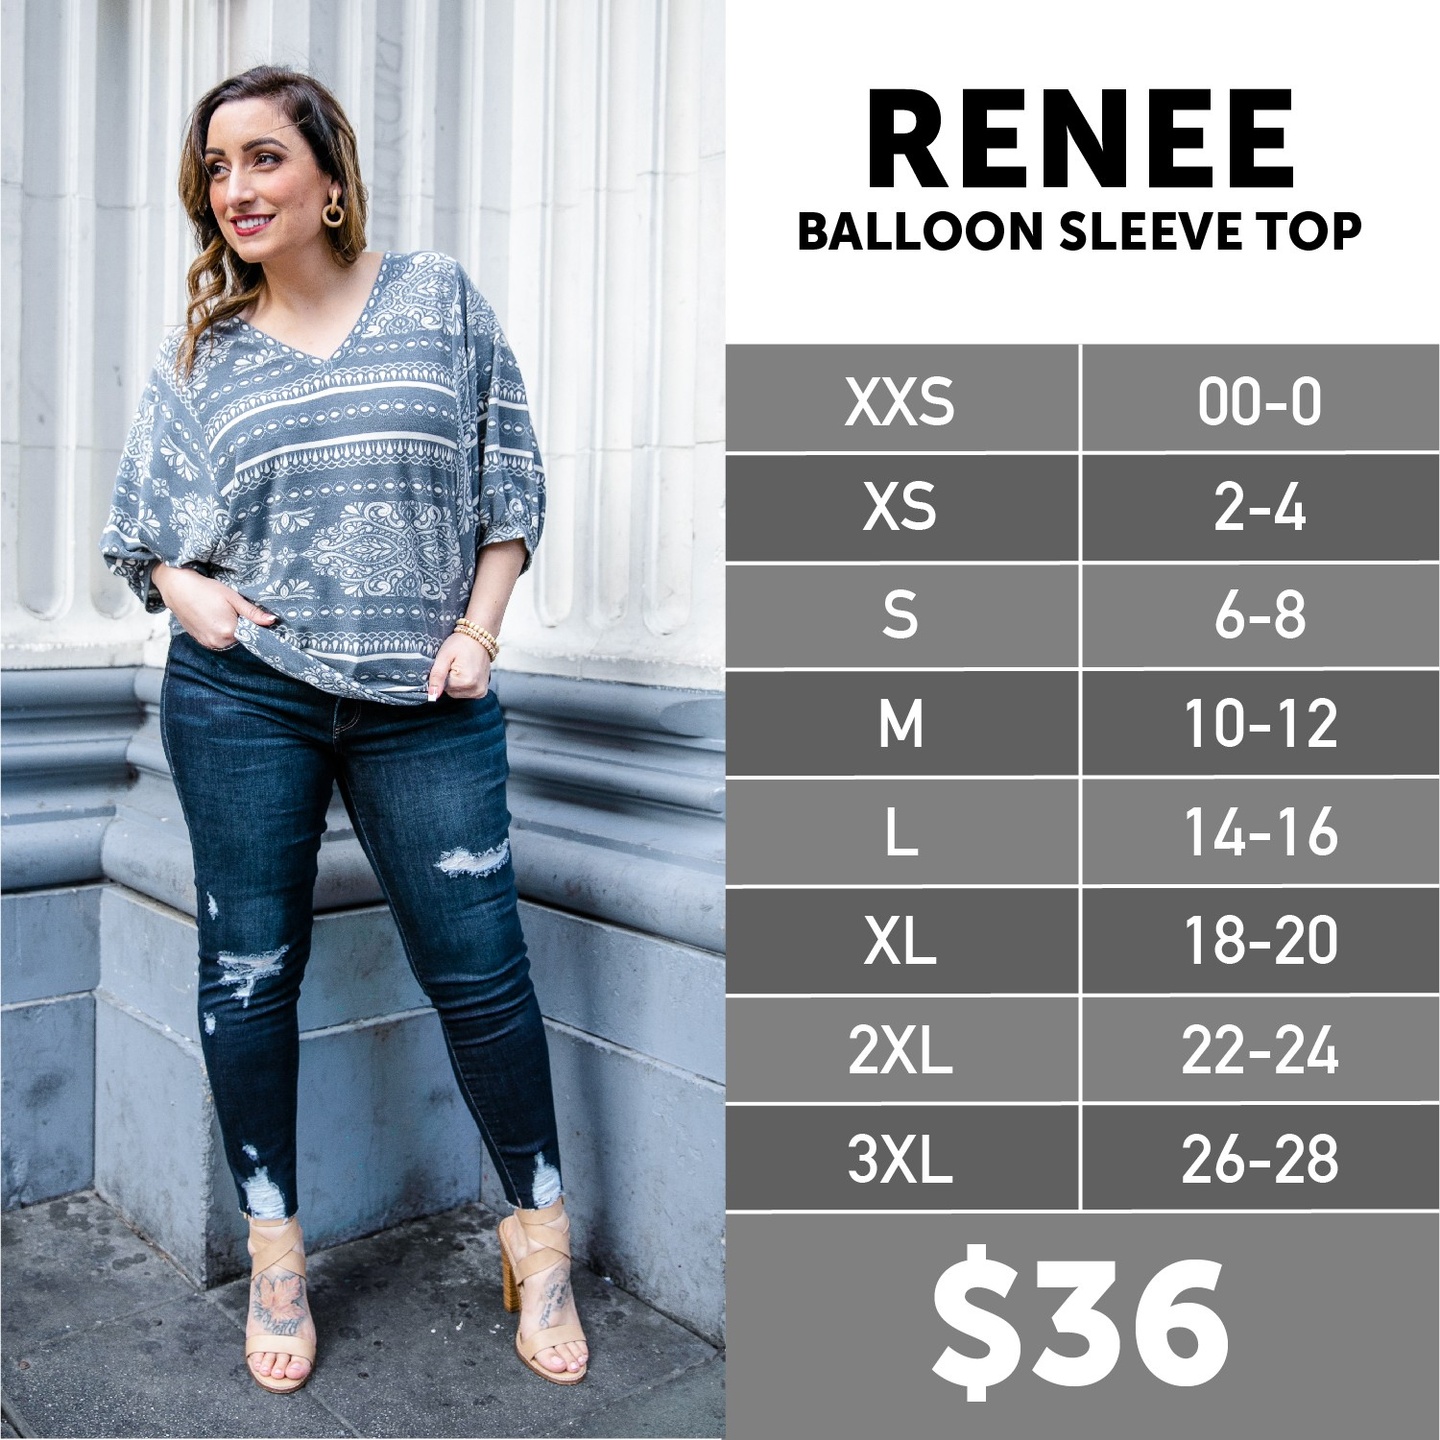 Lularoe Renee Balloon Sleeve Top Size Chart